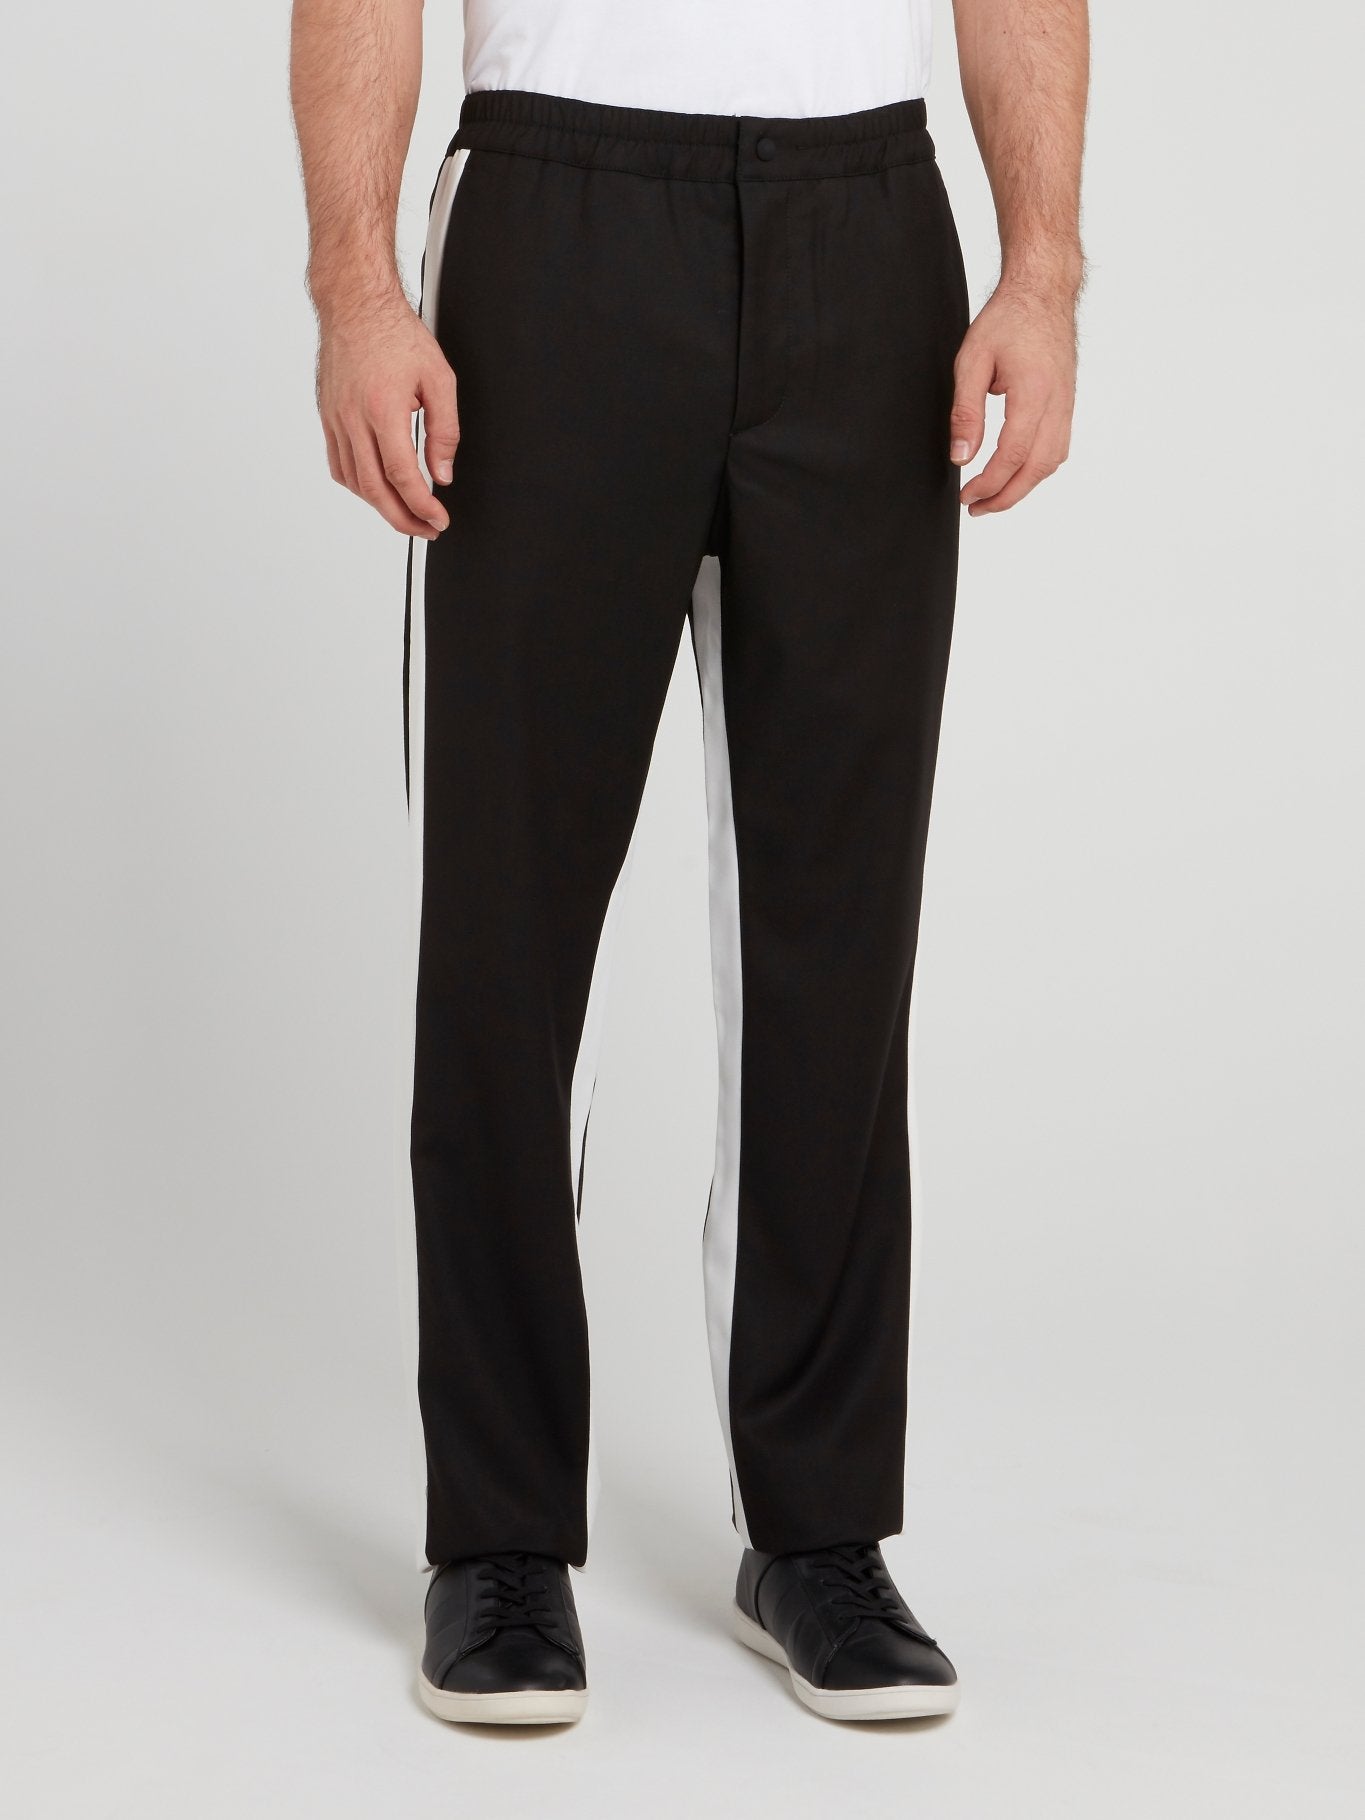 Black Contrast Side Stripe Pants